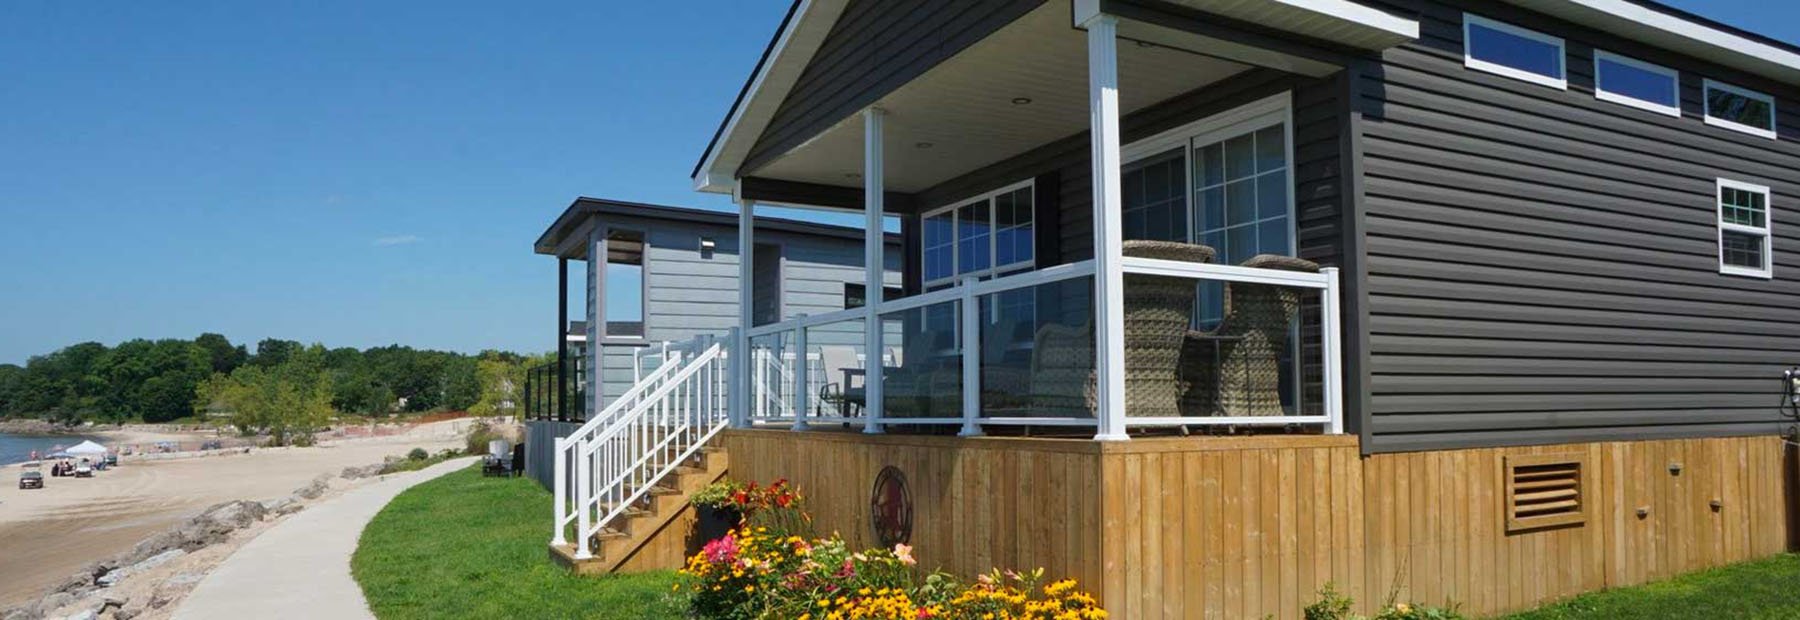 Sun Retreats Sherkston Shores Homes for Sale